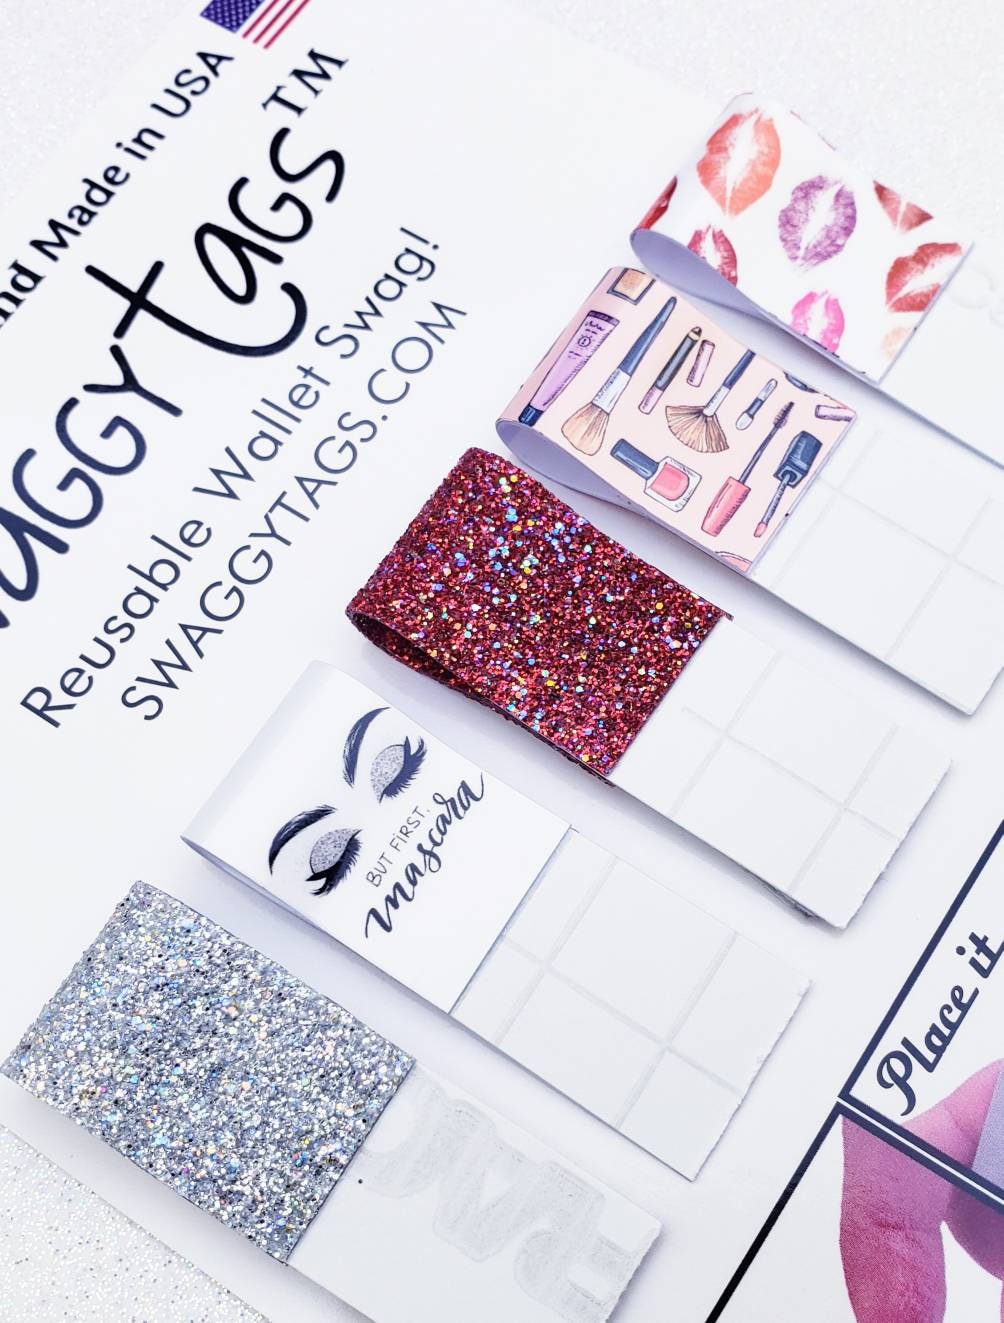 Designer Brands Nail Art Stickers Set - Louis Vuitton (D019) – Oz